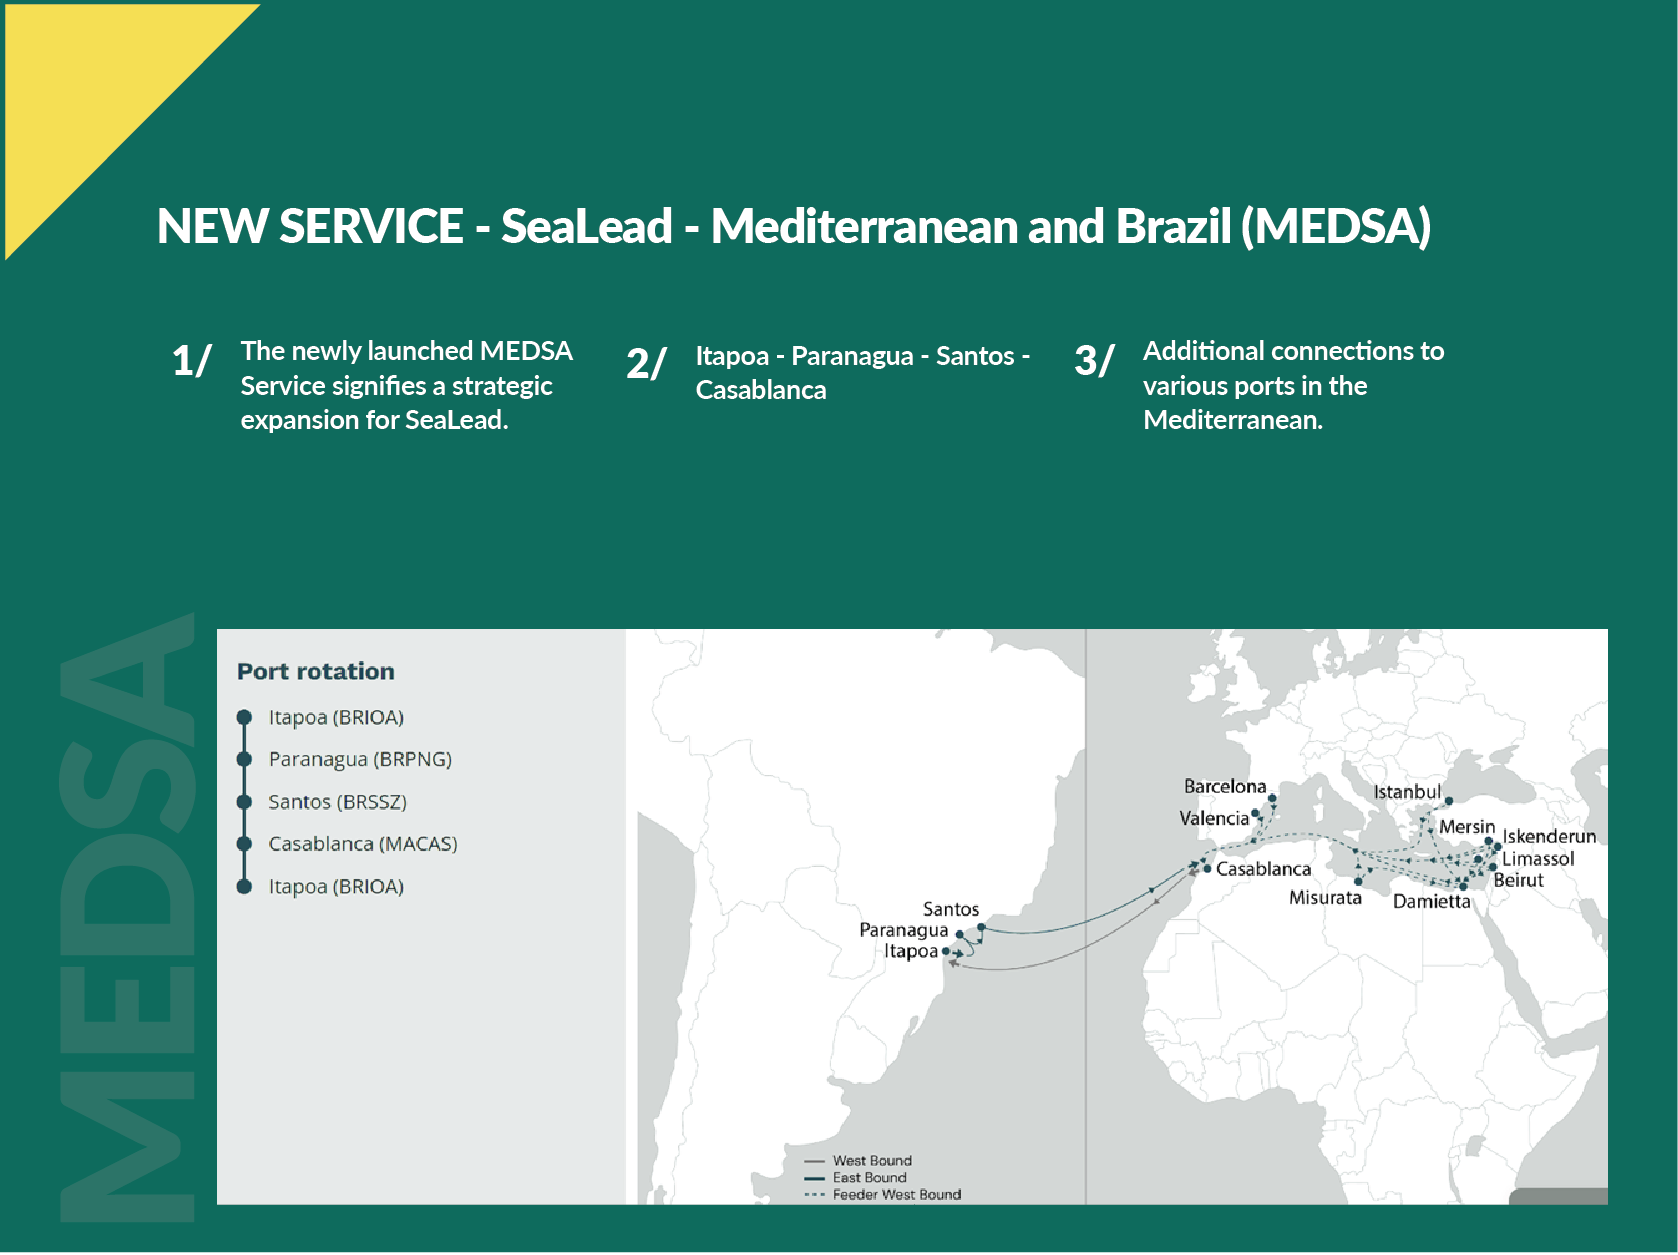 NEW SERVICE - SEALEAD - Medsa